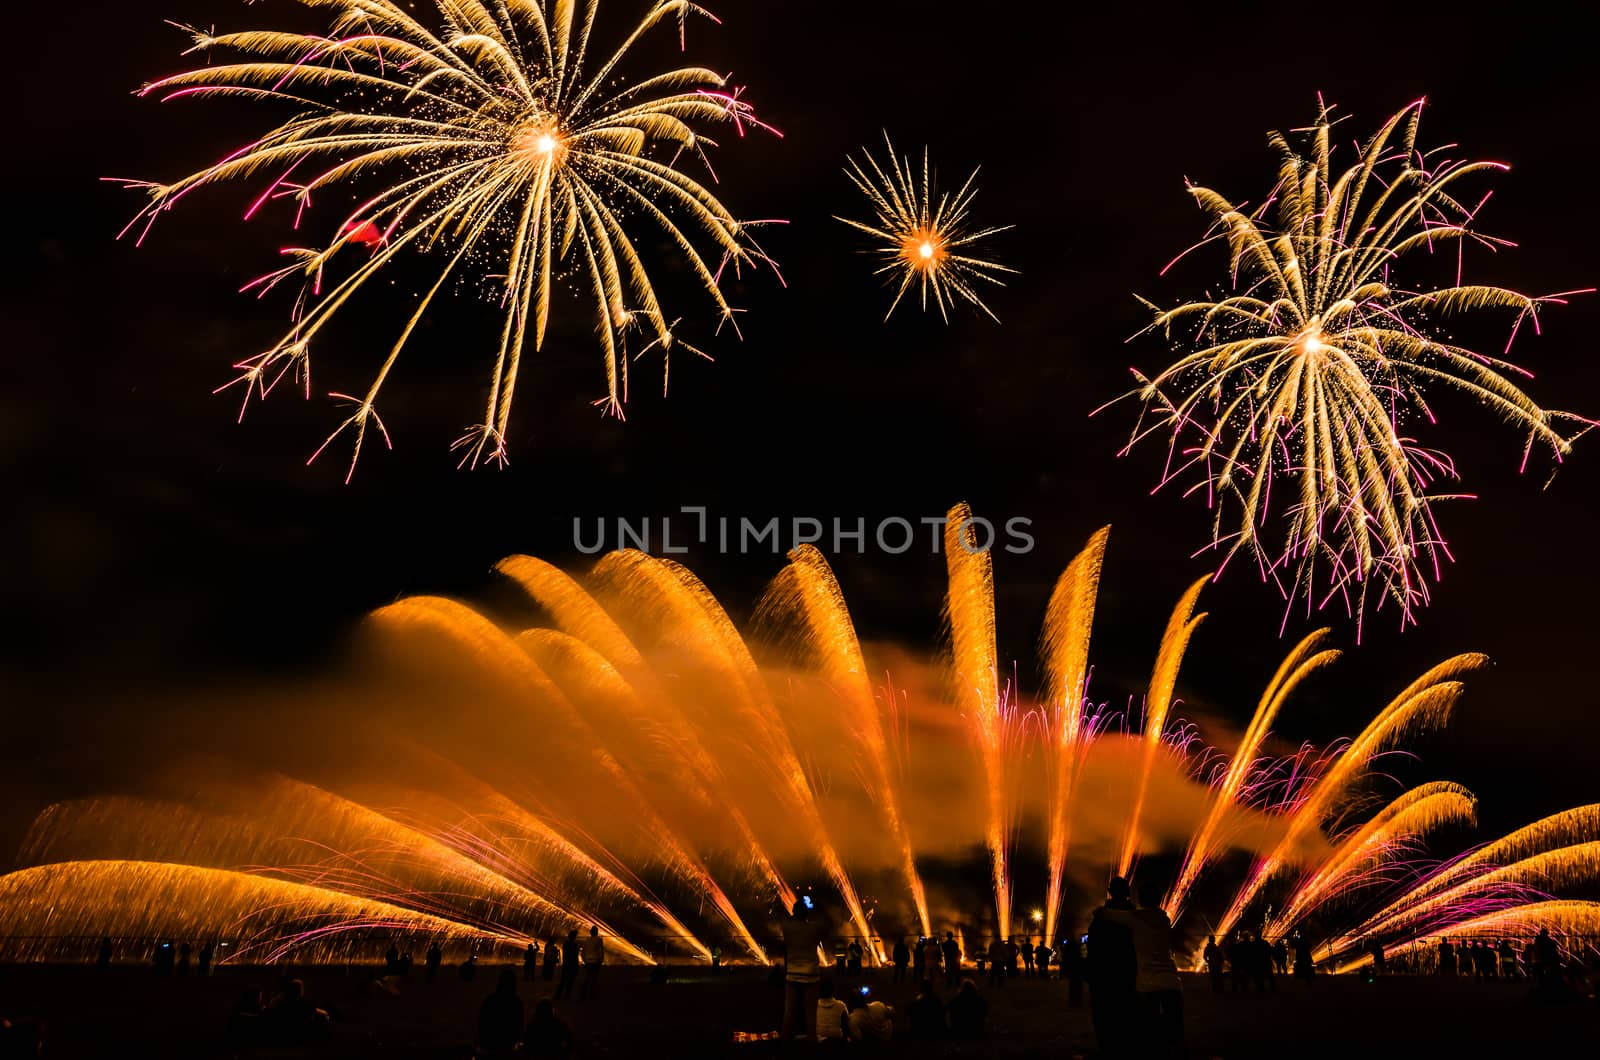 Colorful fireworks over night sky by Attila